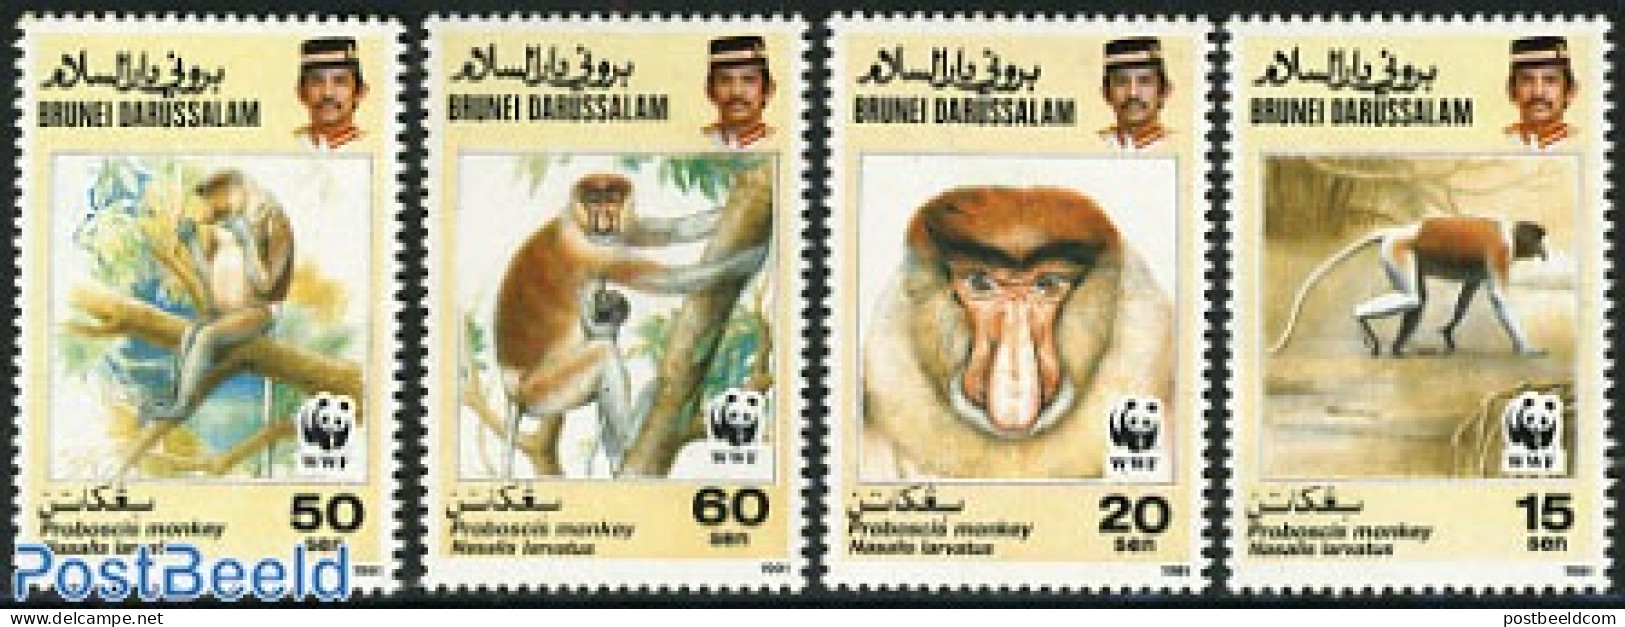 Brunei 1991 WWF, Monkeys 4v, Mint NH, Nature - Monkeys - World Wildlife Fund (WWF) - Brunei (1984-...)